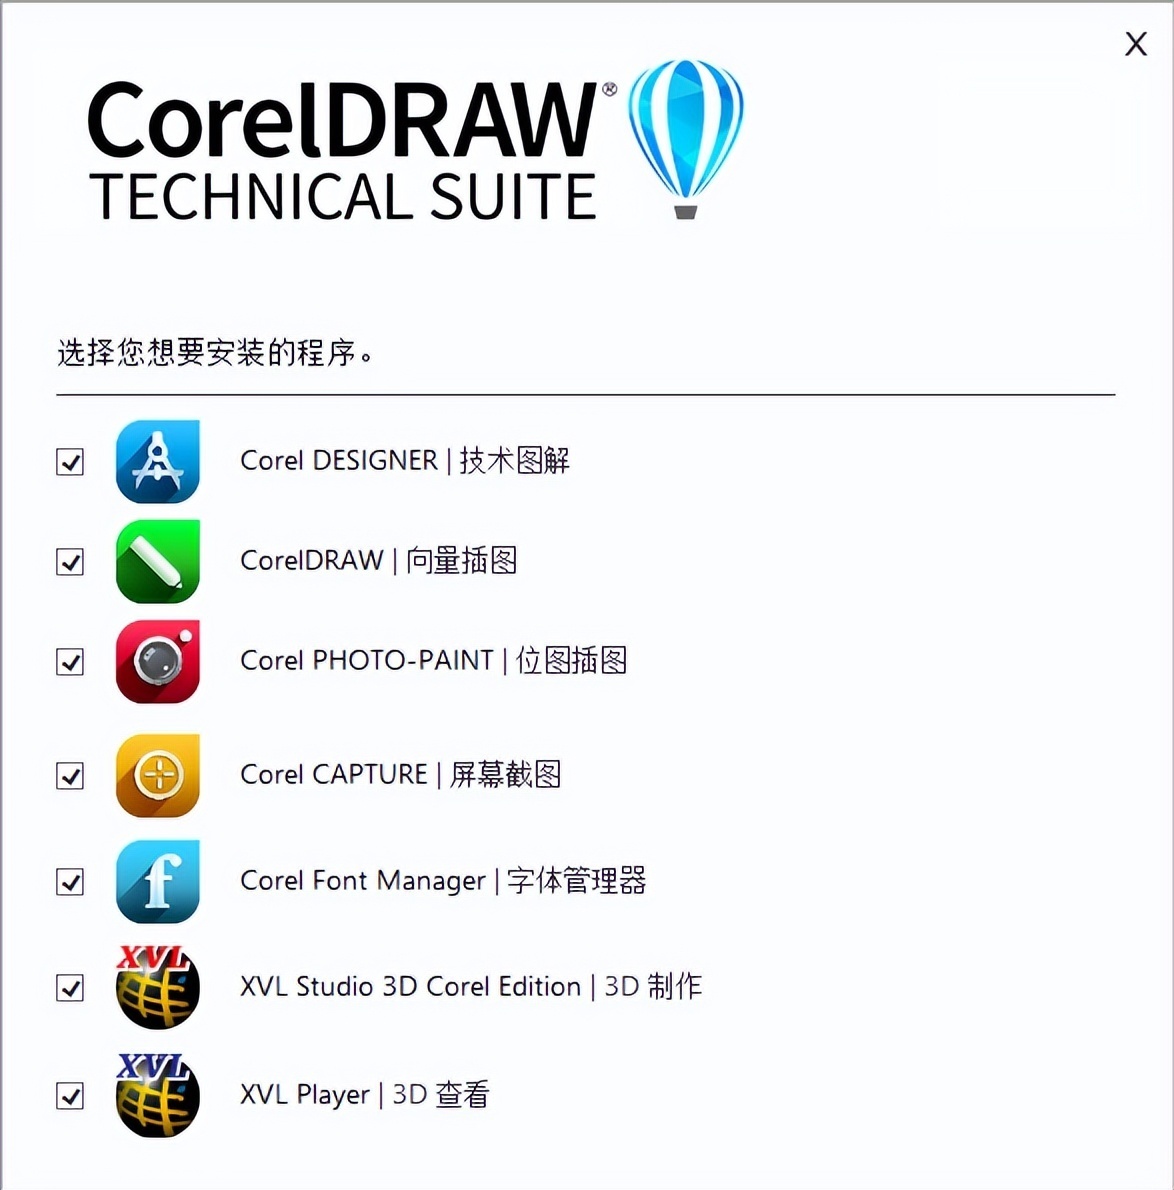 CorelDRAW Technical Suitе 2022 v24.1.0.360 x64 中文特别企业版免激活直装版下载